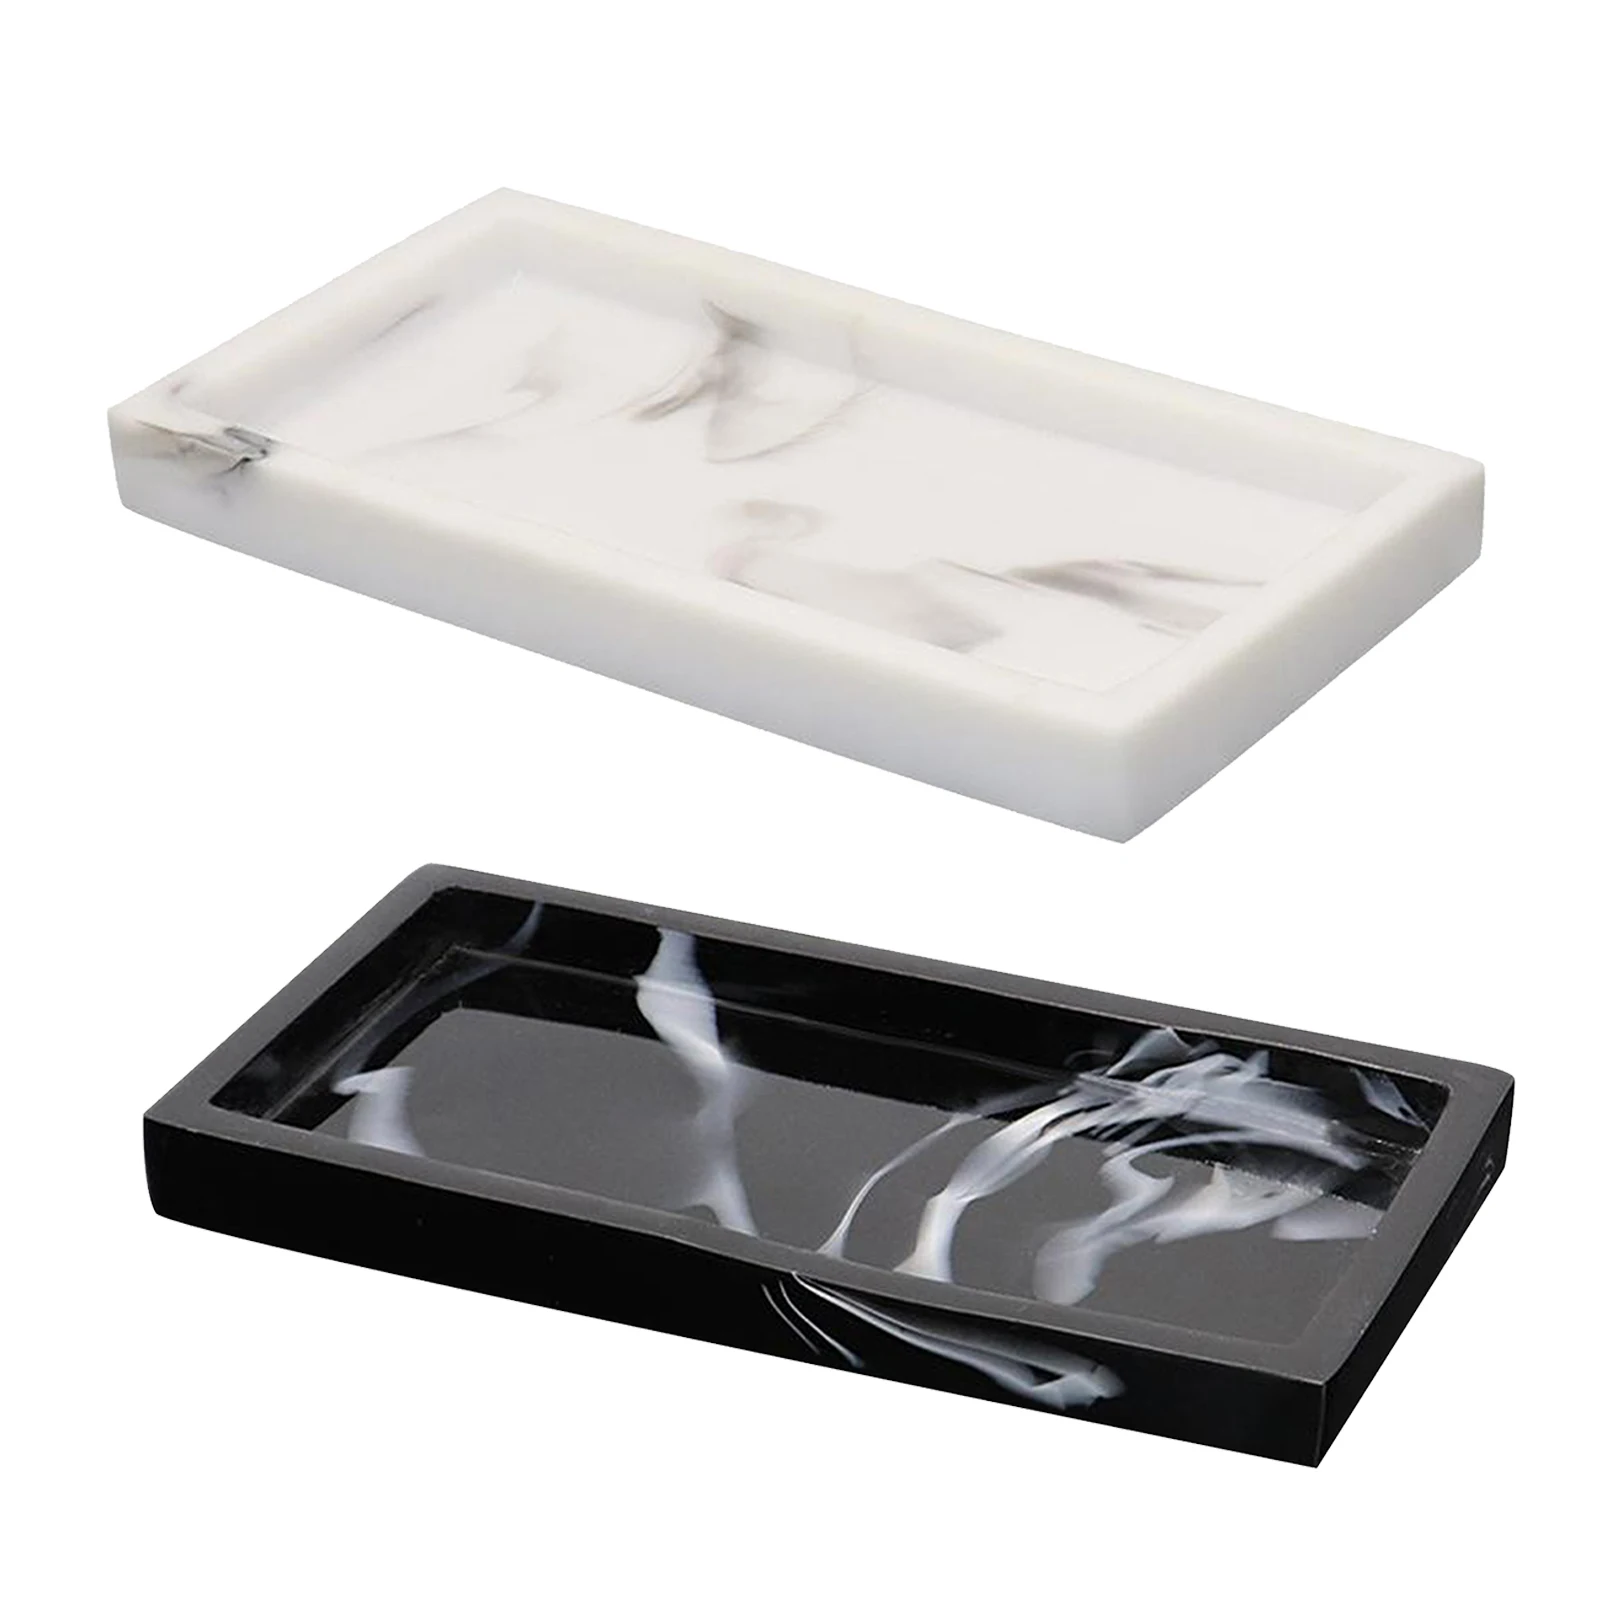 1pc Bathroom Tank Tray Resin Bathtub Serving Tray Plate Kitchen Dresser Dish Dispenser for Soap Cosmetic Plant